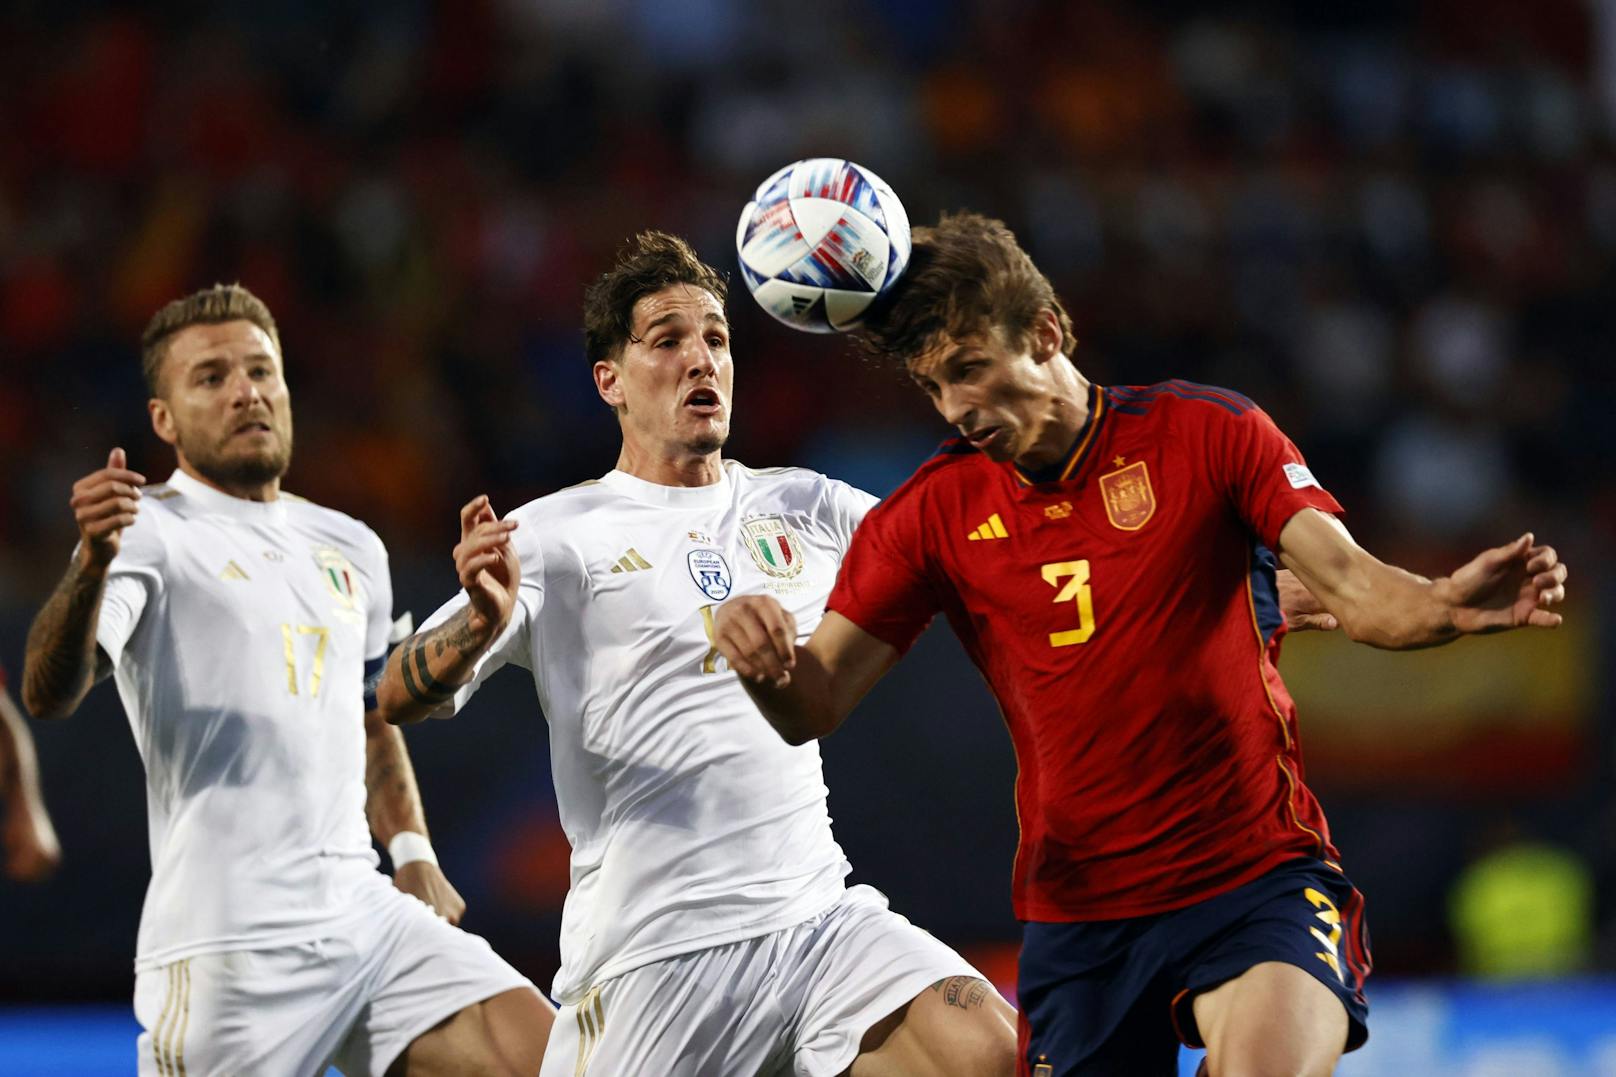 2:1! Spanien folgt Kroatien ins Nations-League-Finale